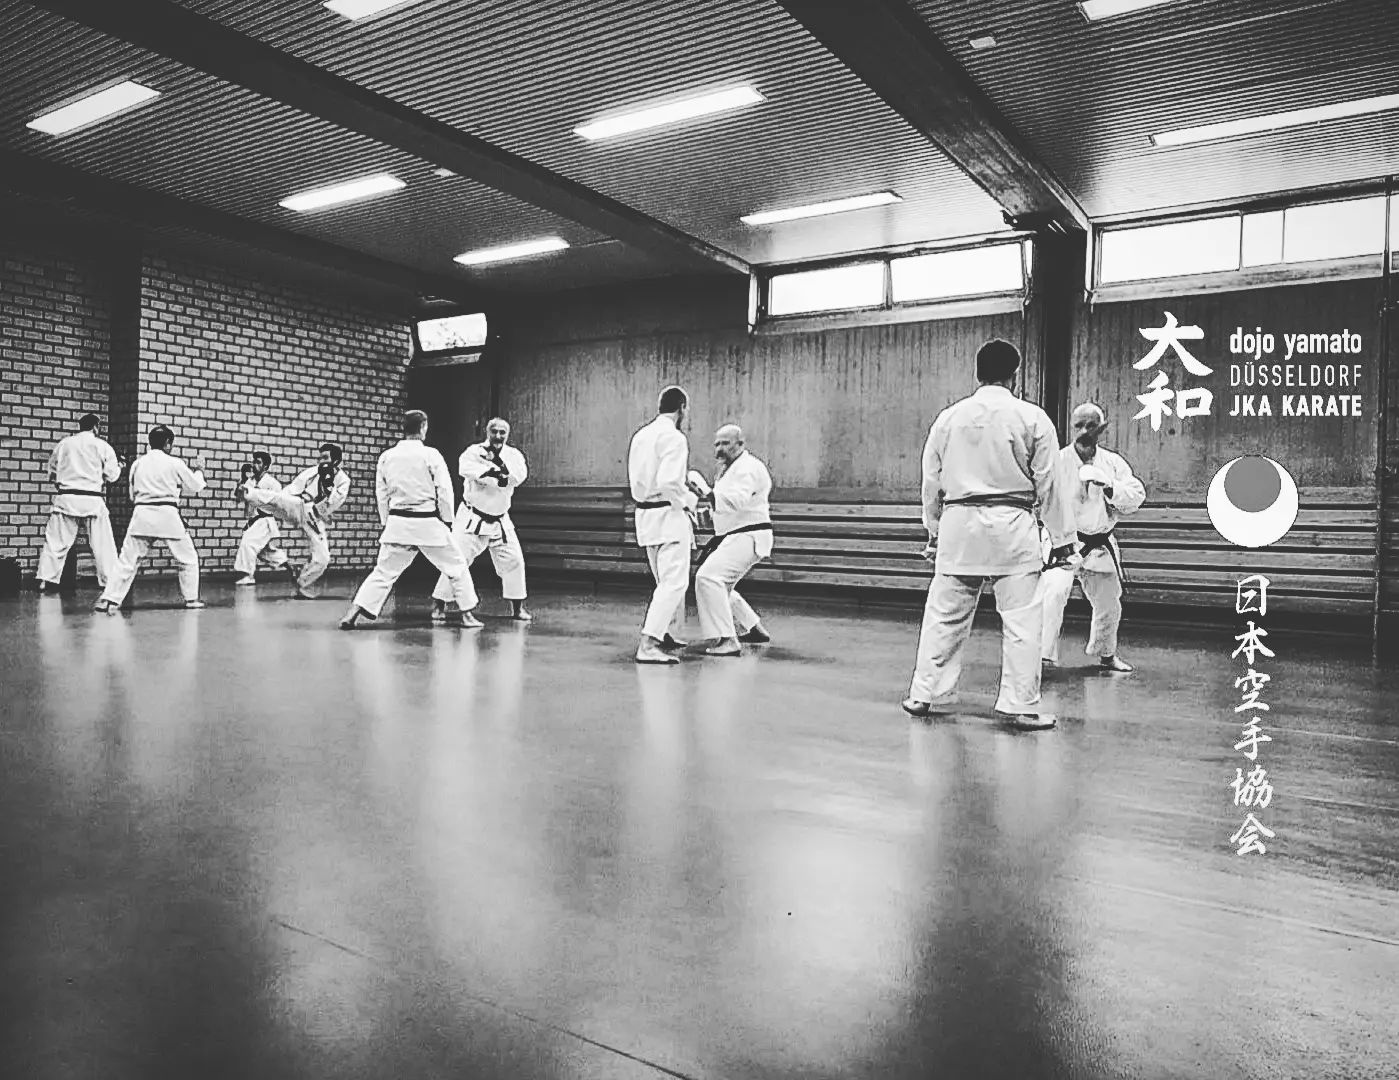 Kumite Training - Dojo Yamato Düsseldorf e.V.🥋
.
.
.
.
.
.
.
#karate #training #fun #jka #djkb #kihon #kata #kumite #düsseldorf #duesseldorf #japan #sport #sportmotivation #shotokan #traditional #nrw #yamatoduesseldorf #fitness #fitnessmotivation #jkaKarate #jkakaratedo #neuss #ratingen #hilden #leverkusen #kaarst #selbstbstbewusstsein #selbstvertrauen